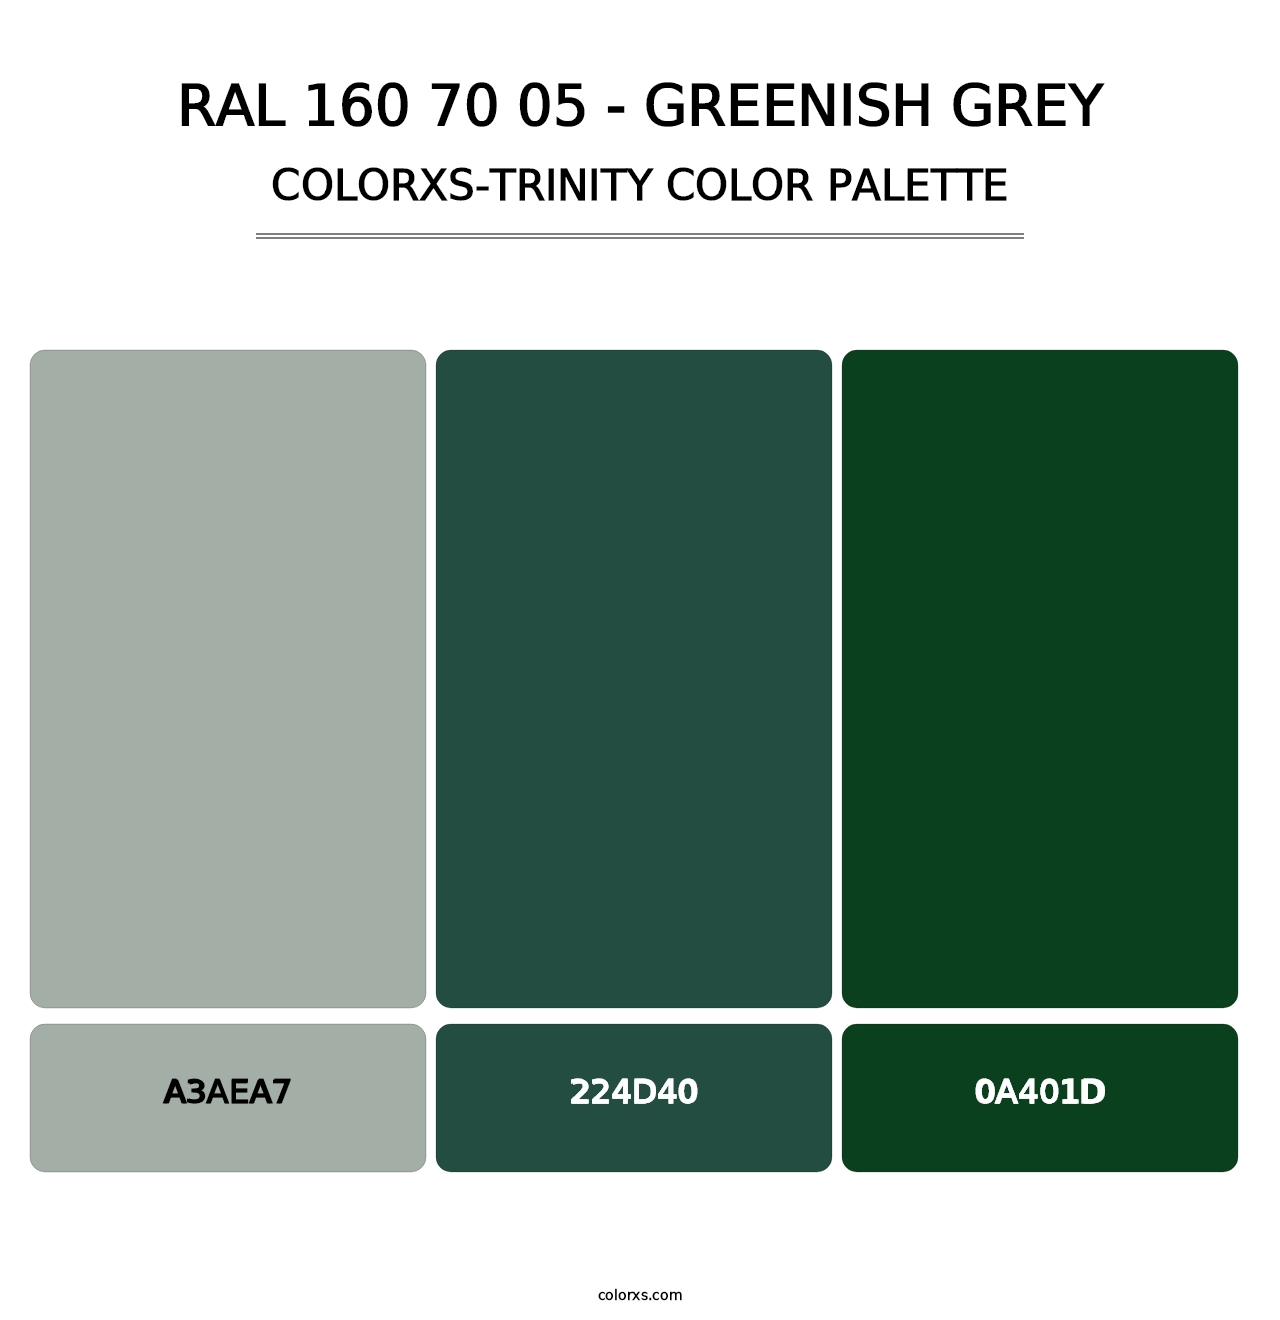 RAL 160 70 05 - Greenish Grey - Colorxs Trinity Palette